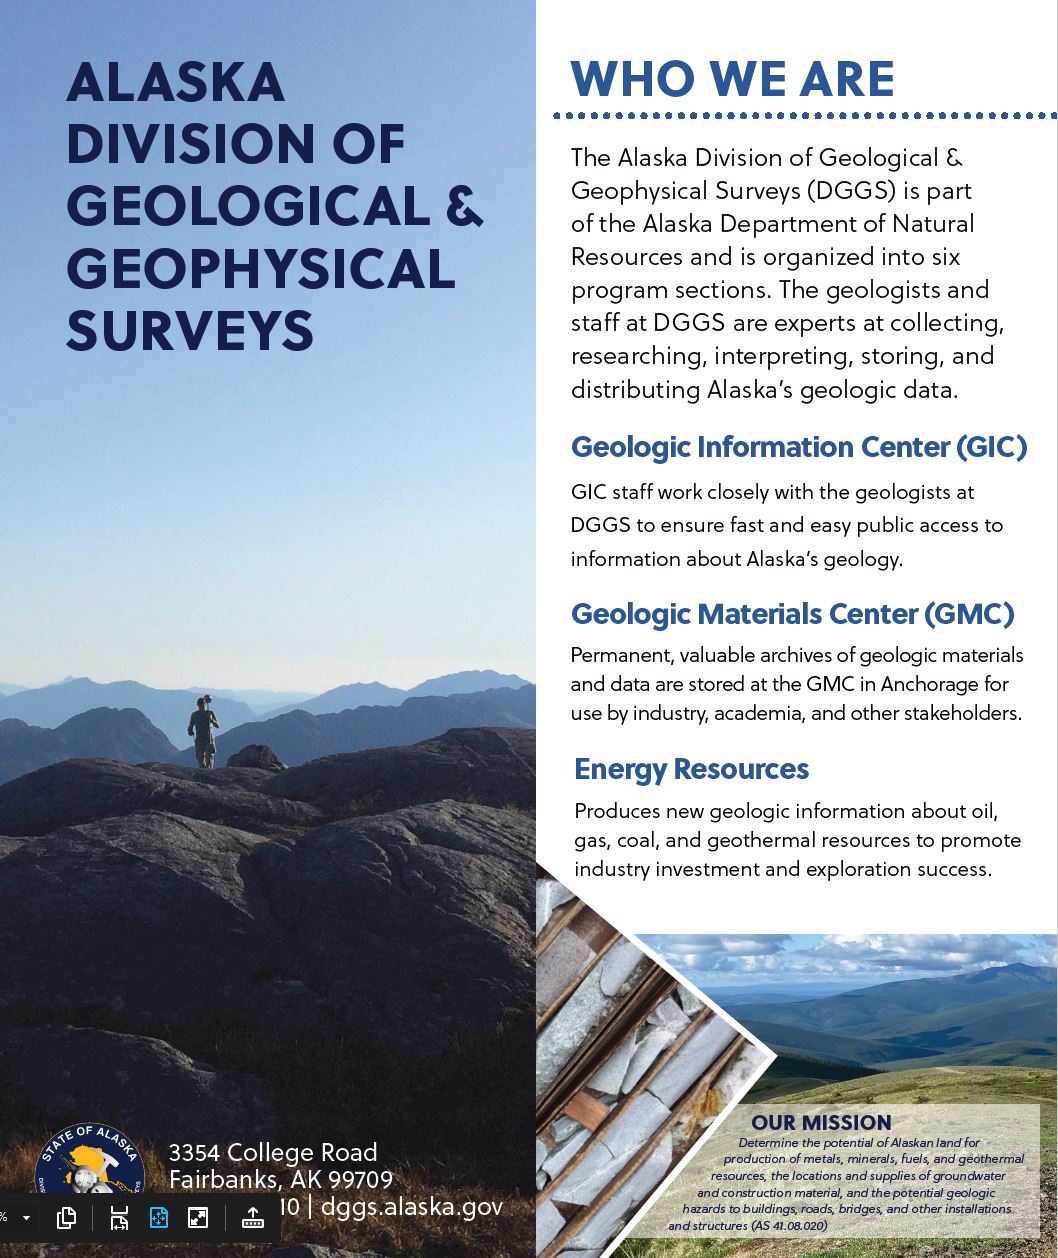 Services of the Alaska Division of Geological & Geophysical Surveys